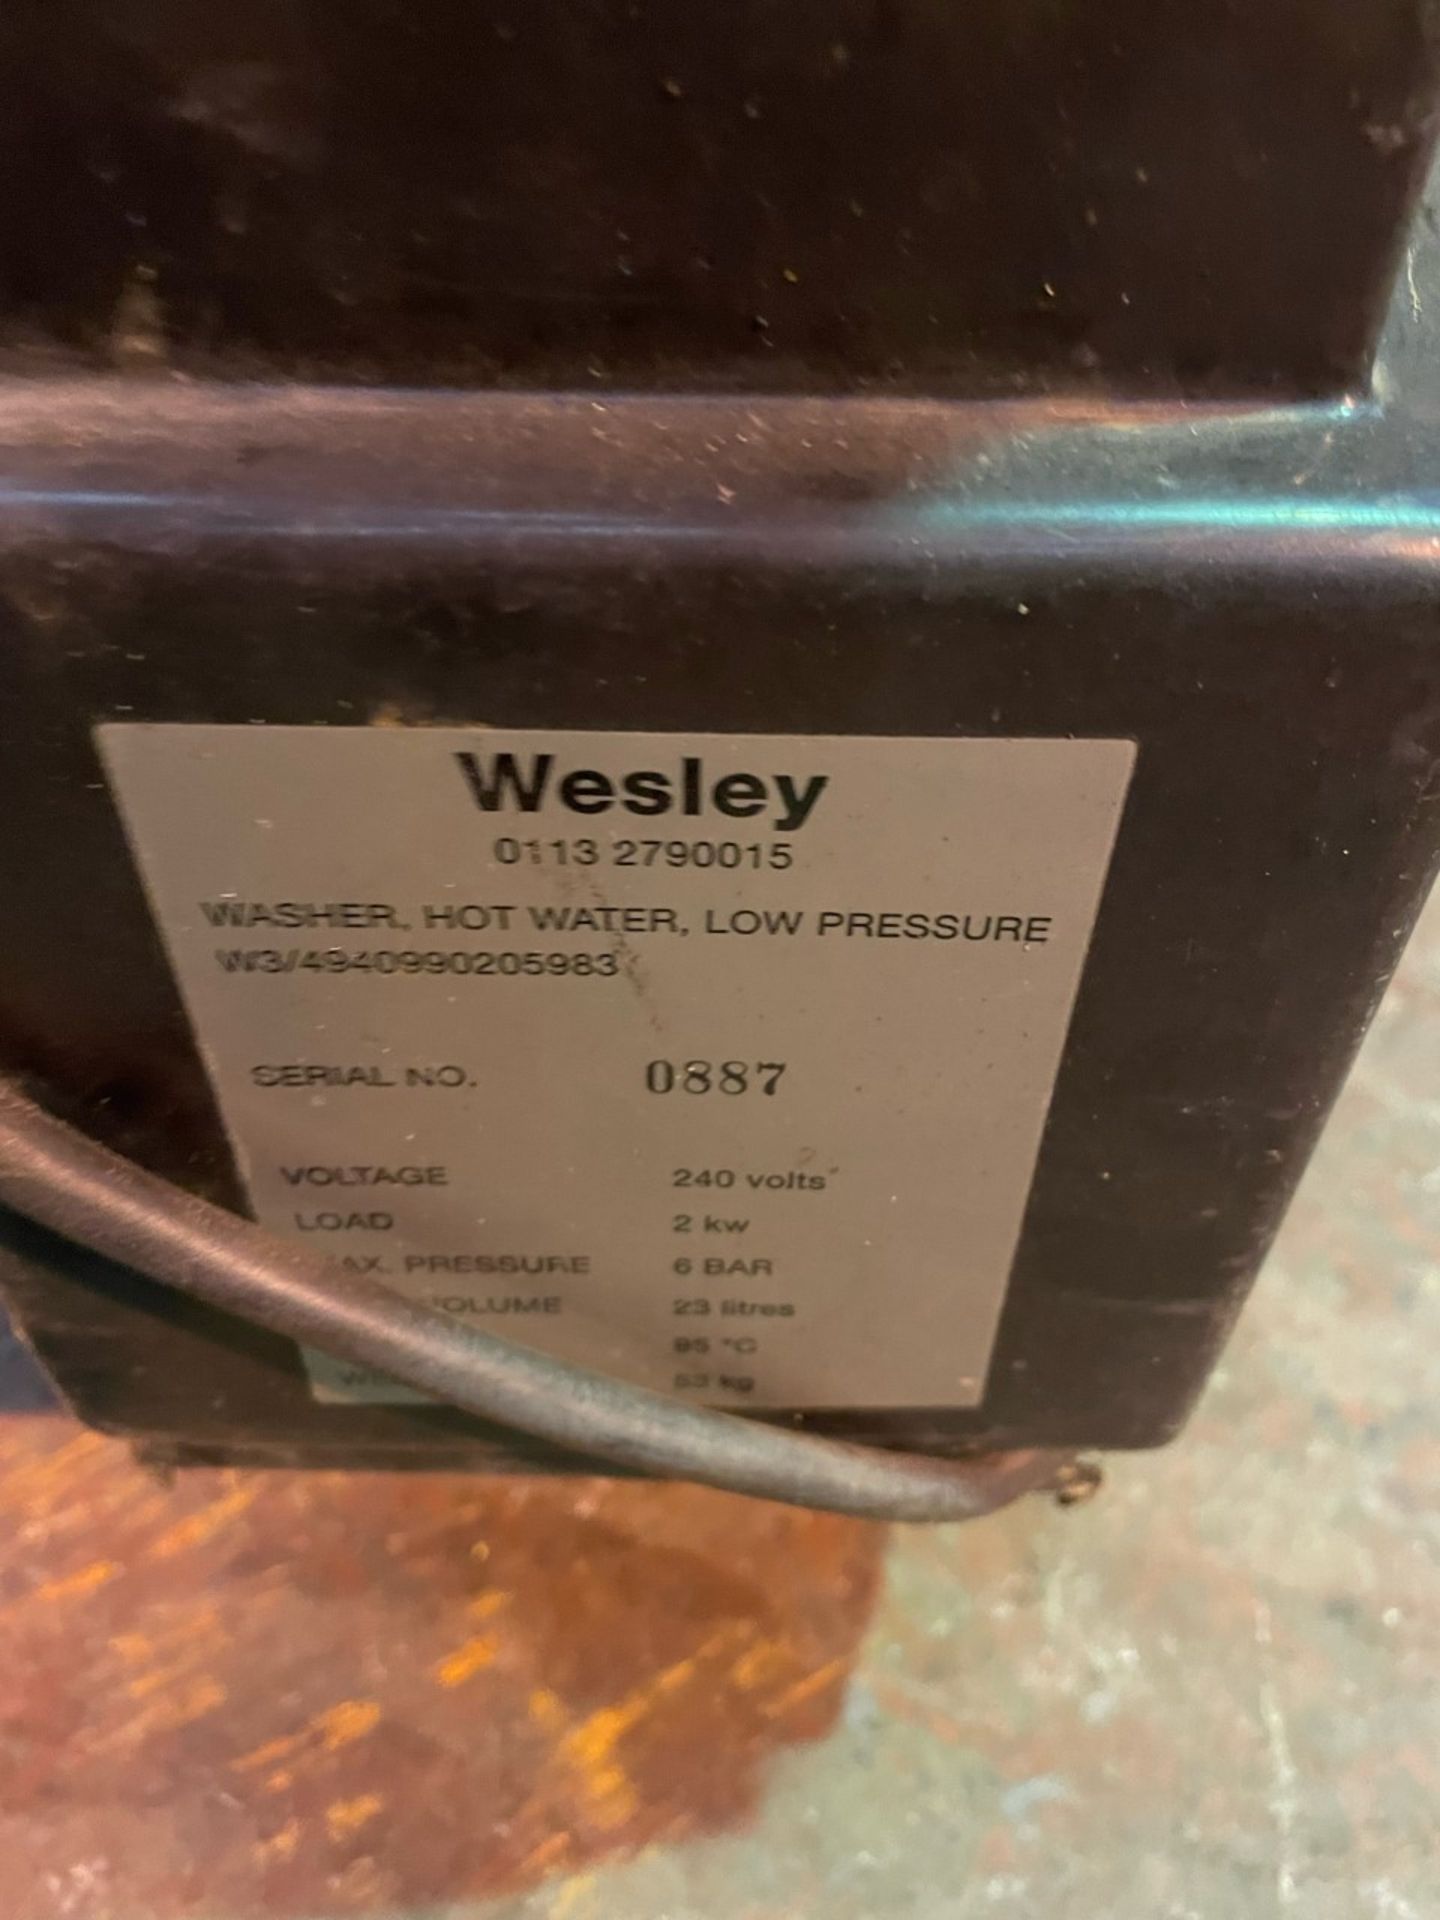 Wesley 680 low pressure hot water washer 240v - Image 5 of 5